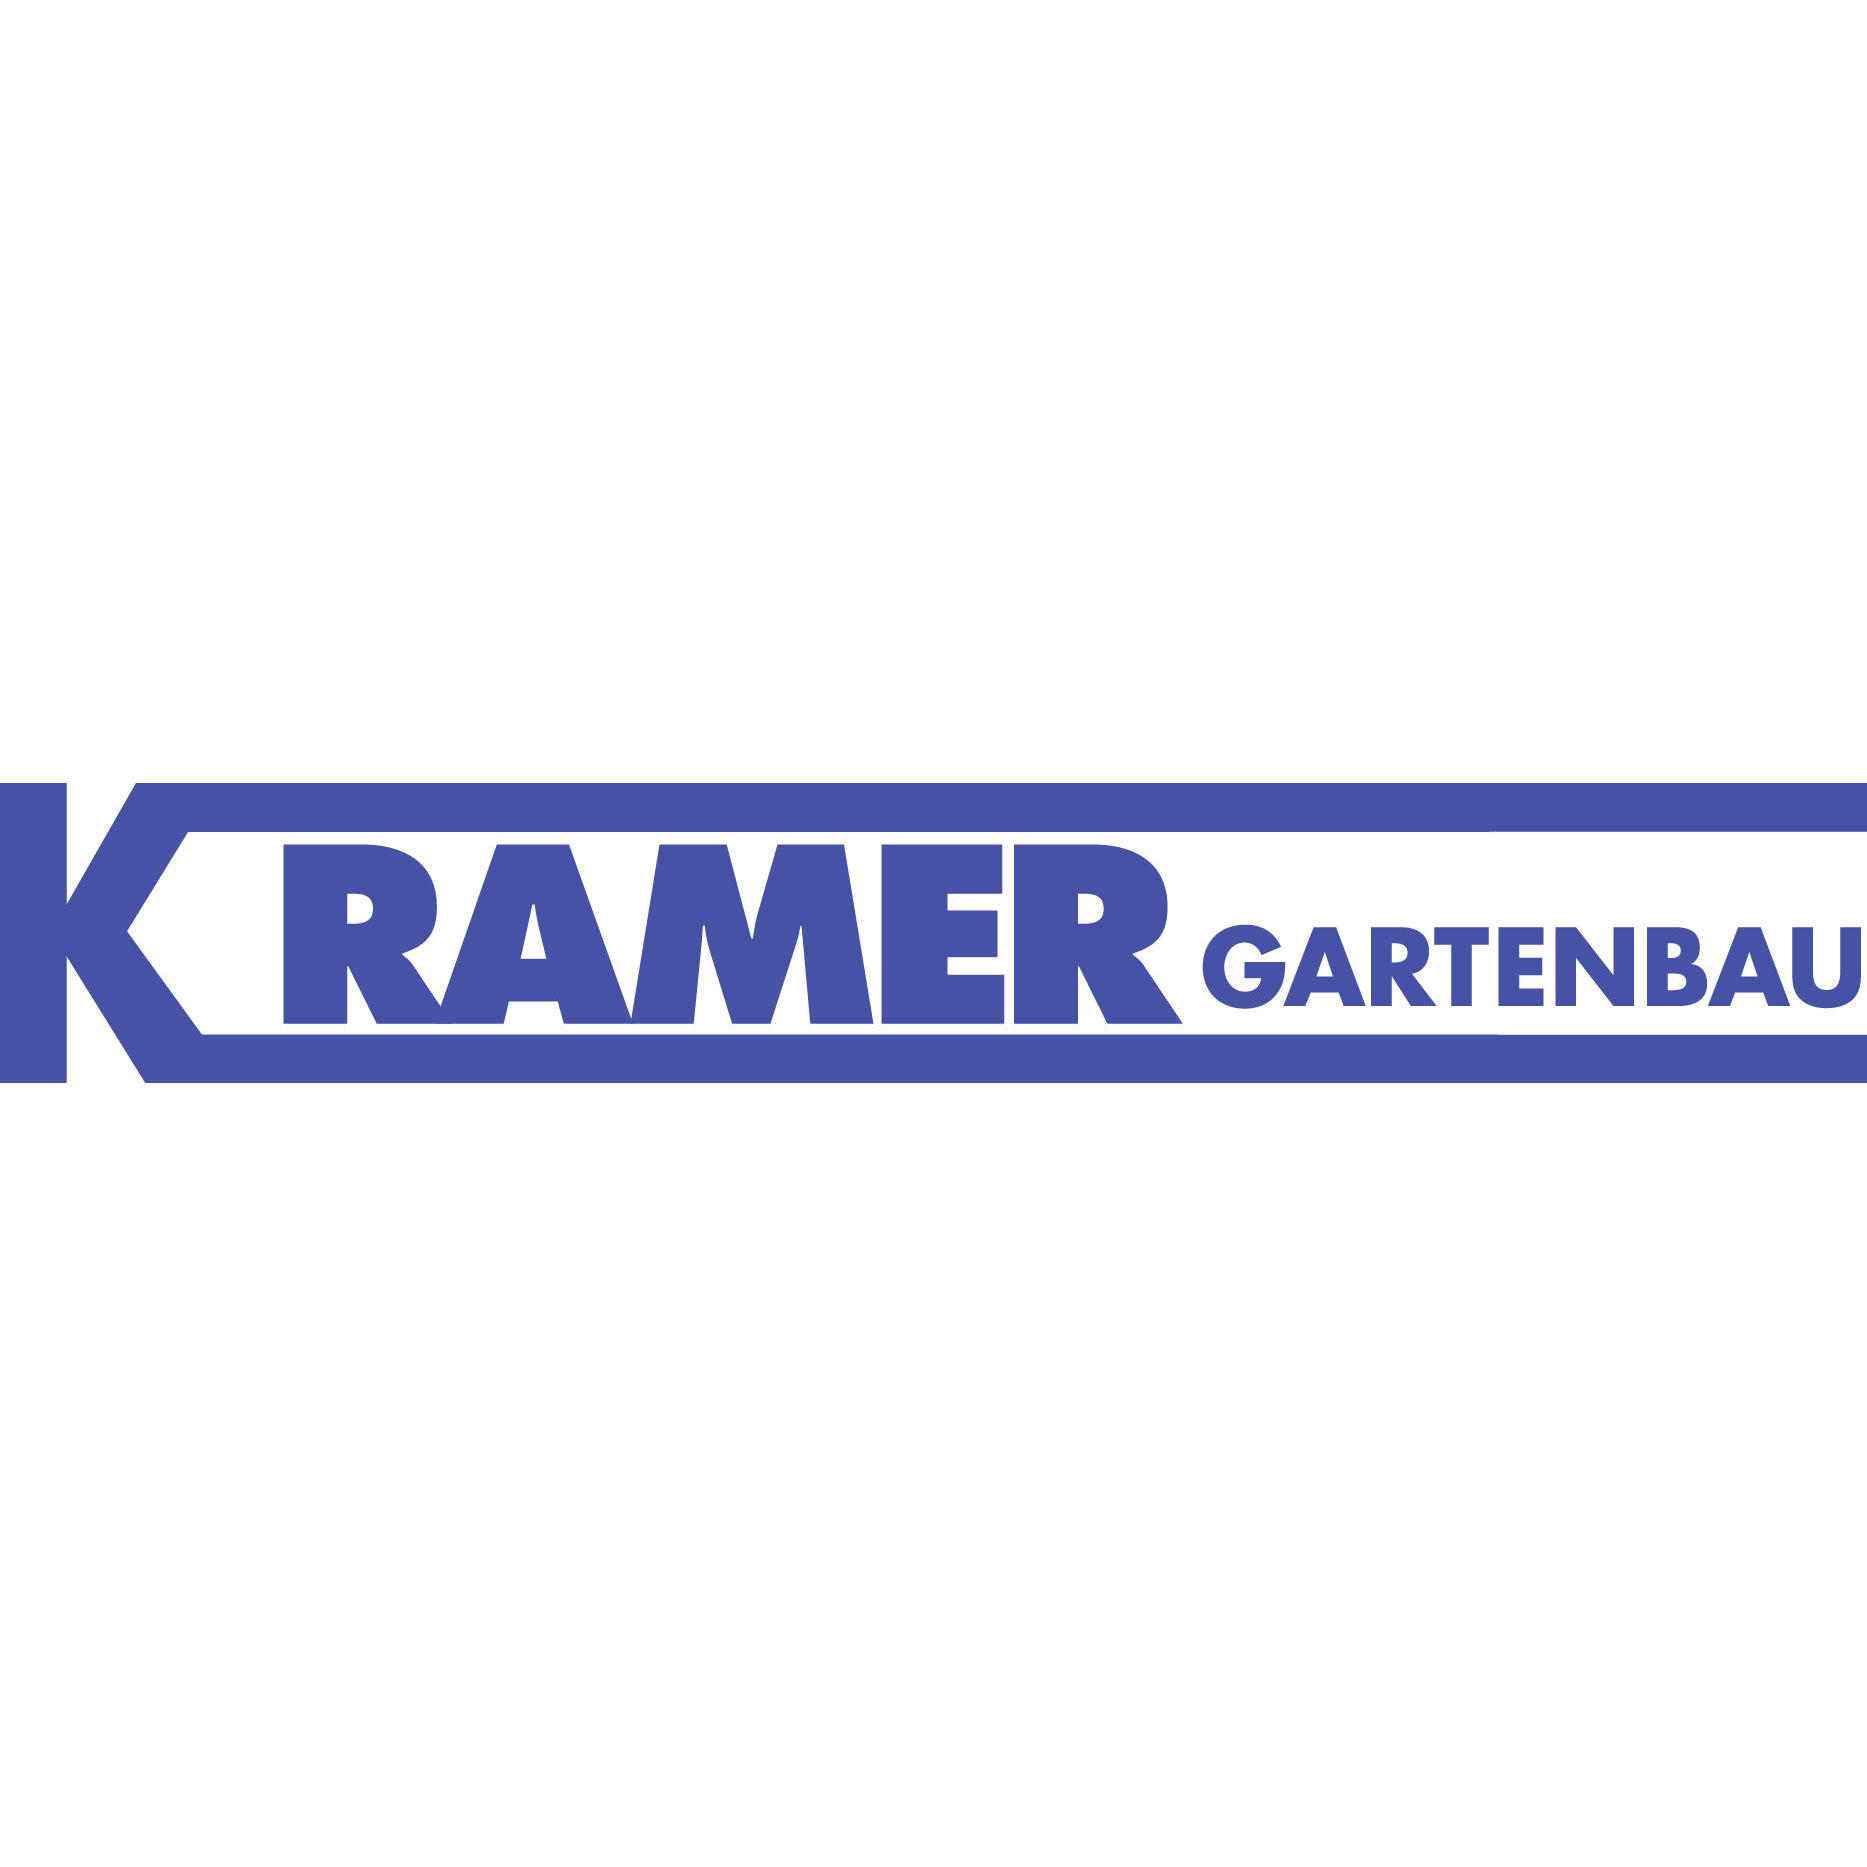 Kramer Gartenbau Logo